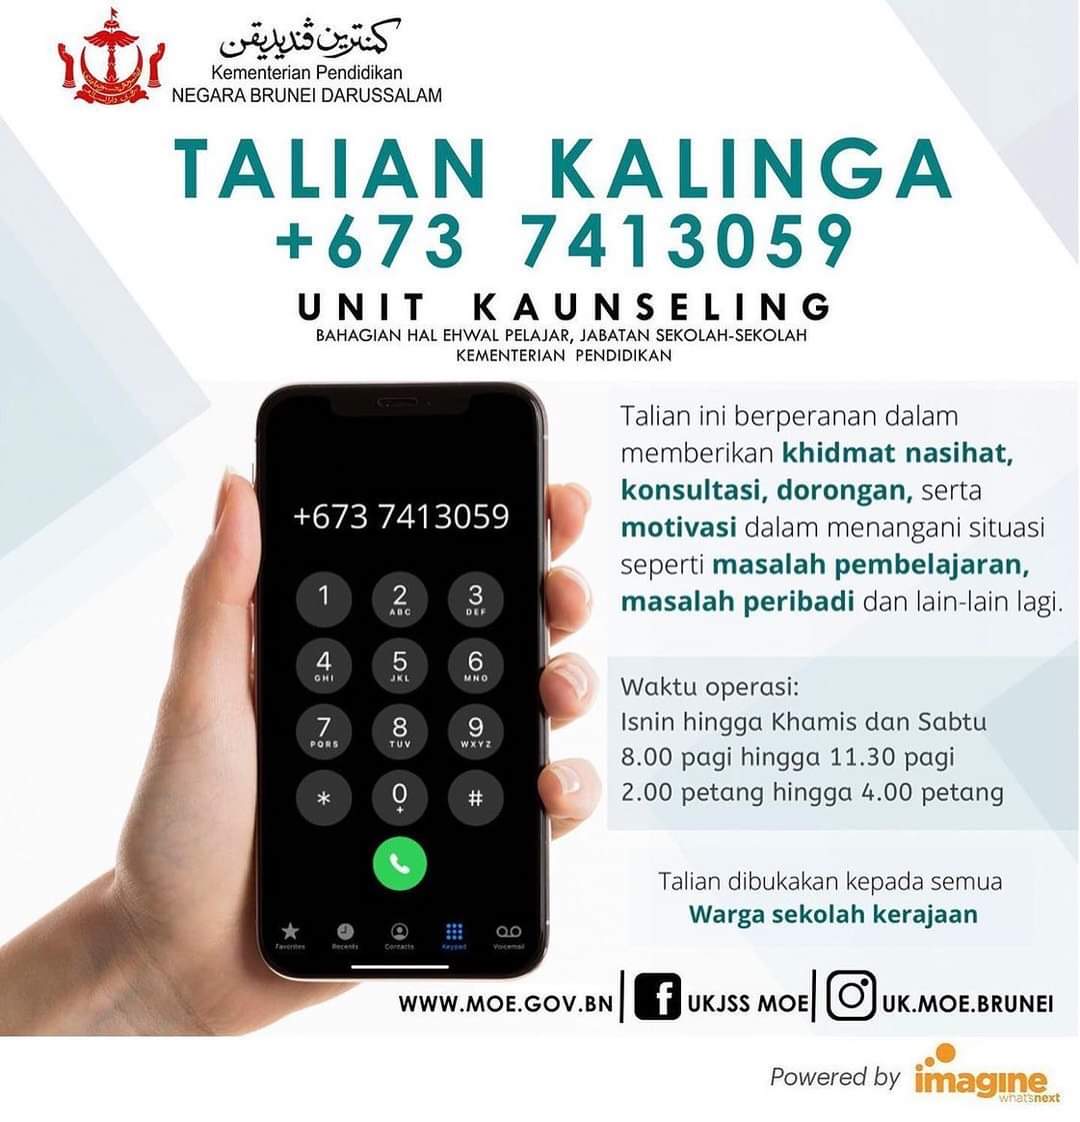 Talian Kalinga Unit Kaunseling.jpg